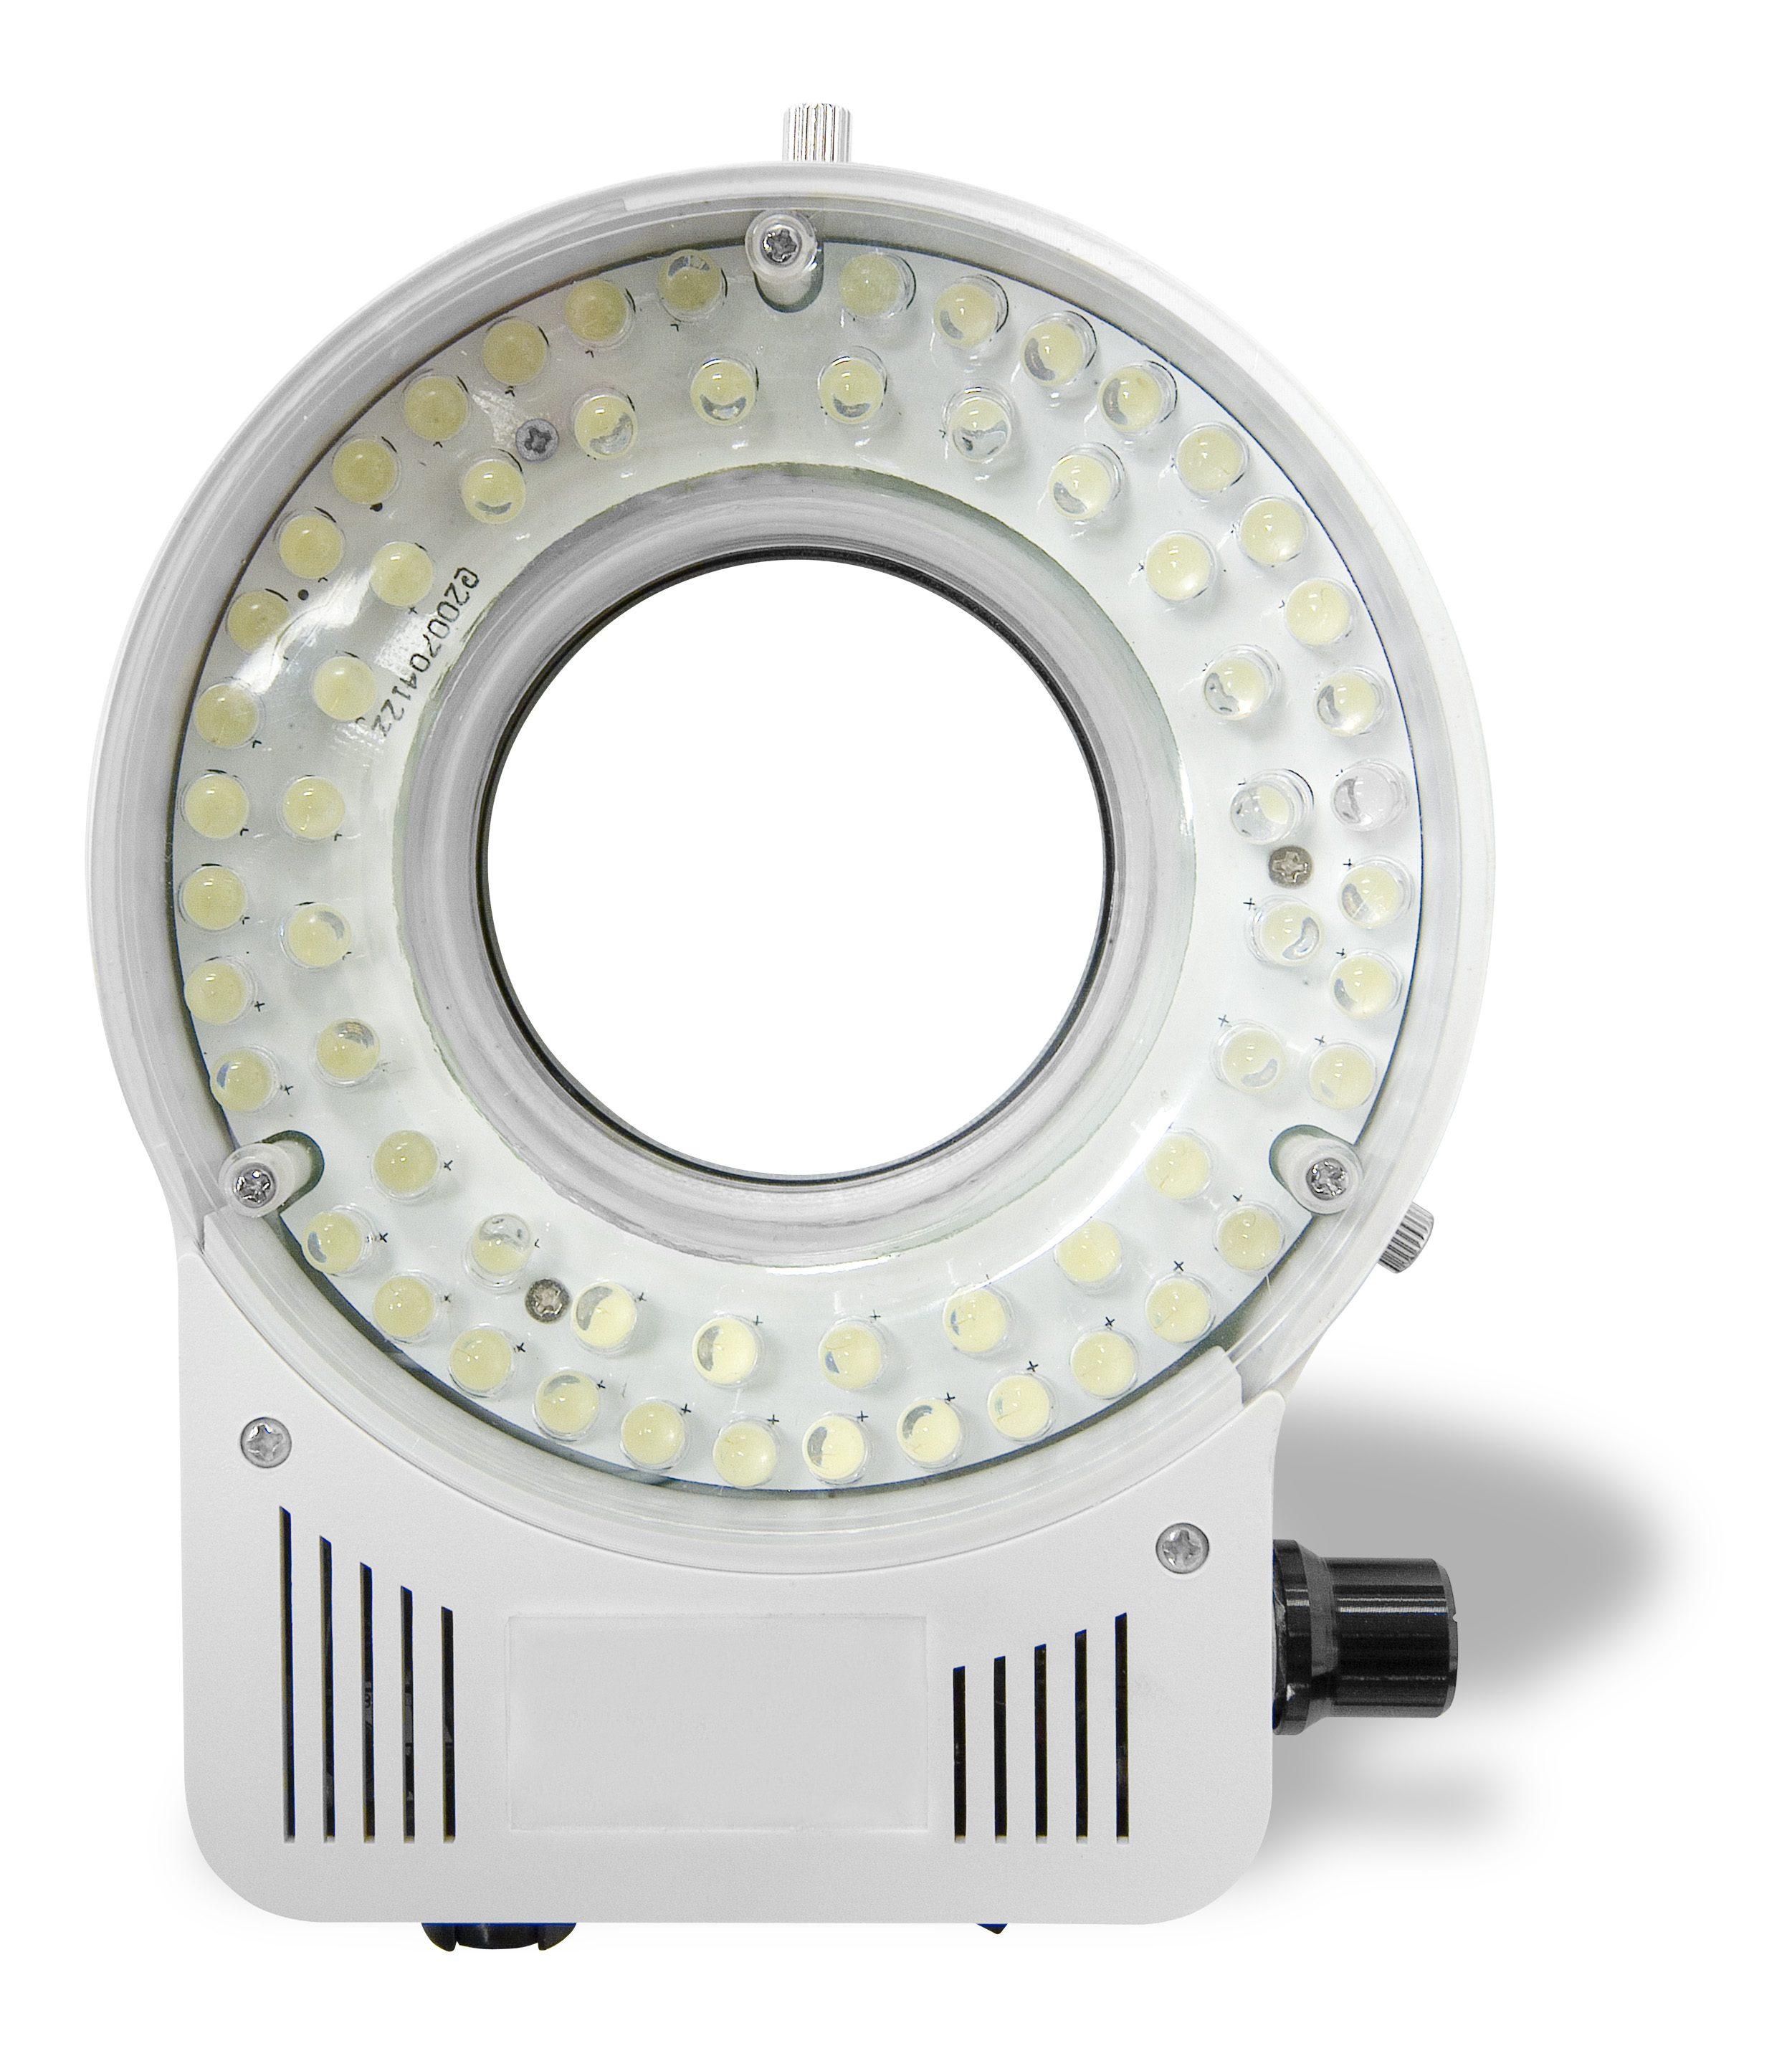 Scienscope IL-LED-E1 LED Ring Light Bottom Profile View